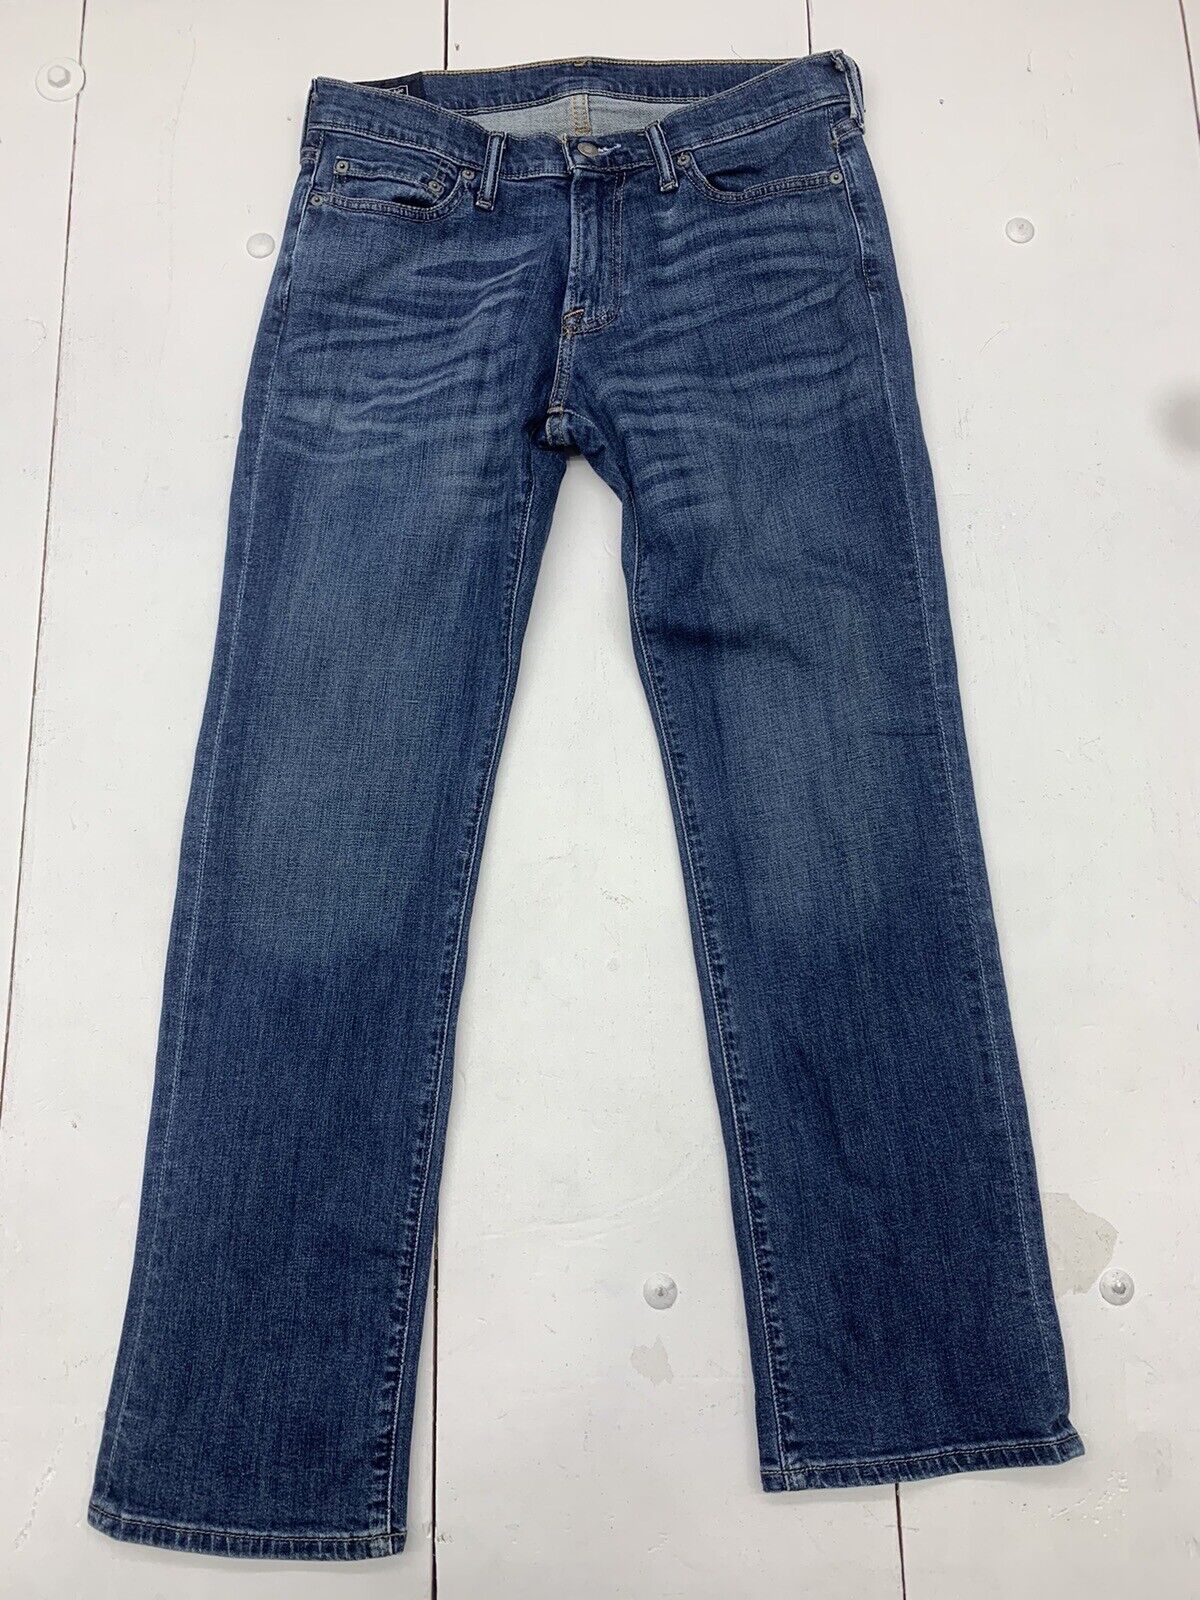 Abercrombie & Fitch Kennan Straight Leg Blue Denim Jeans Mens Size 30x30